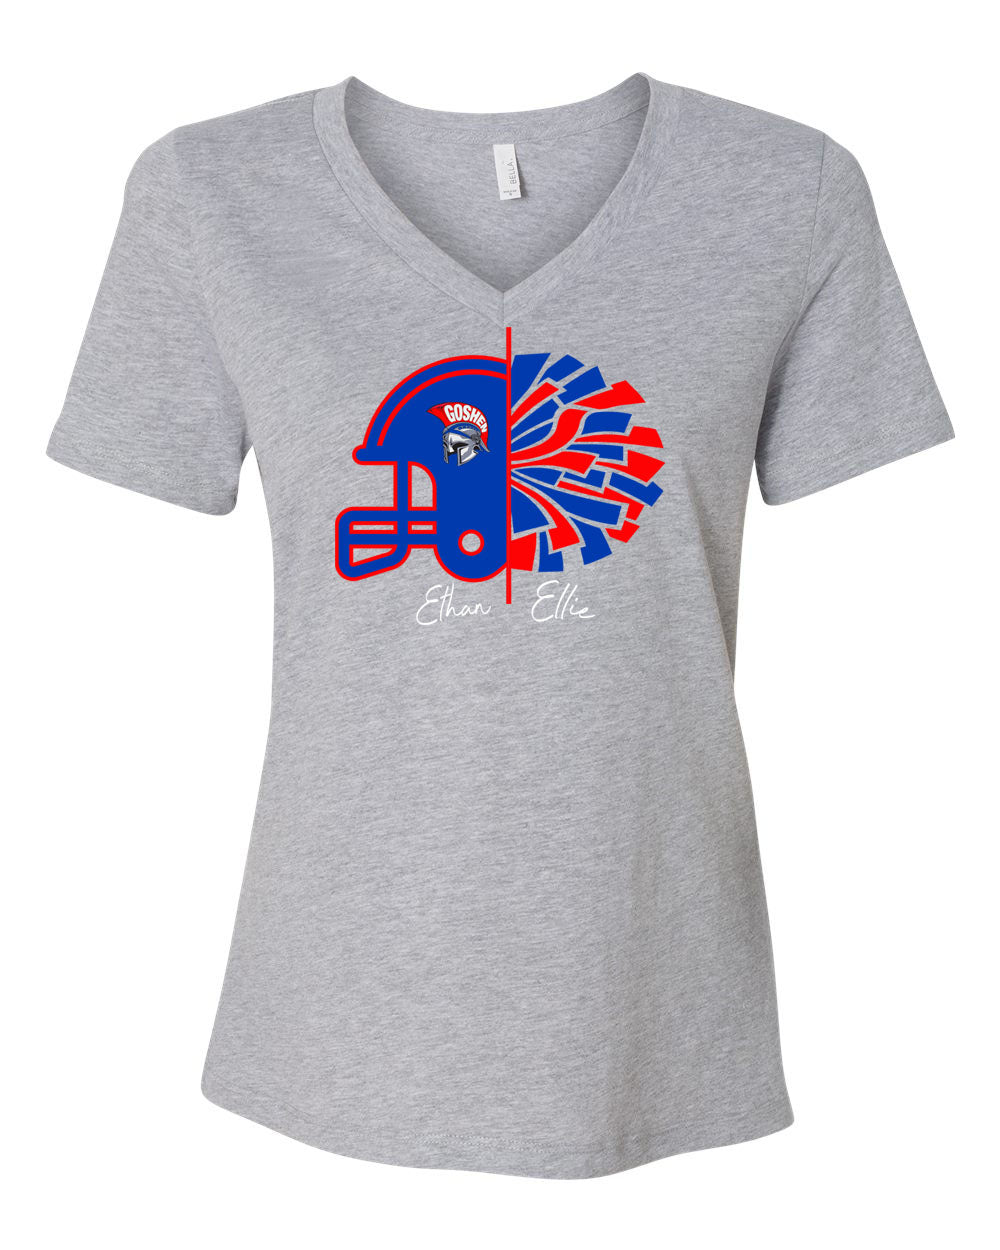 Goshen Cheer Design 7 V-neck T-shirt